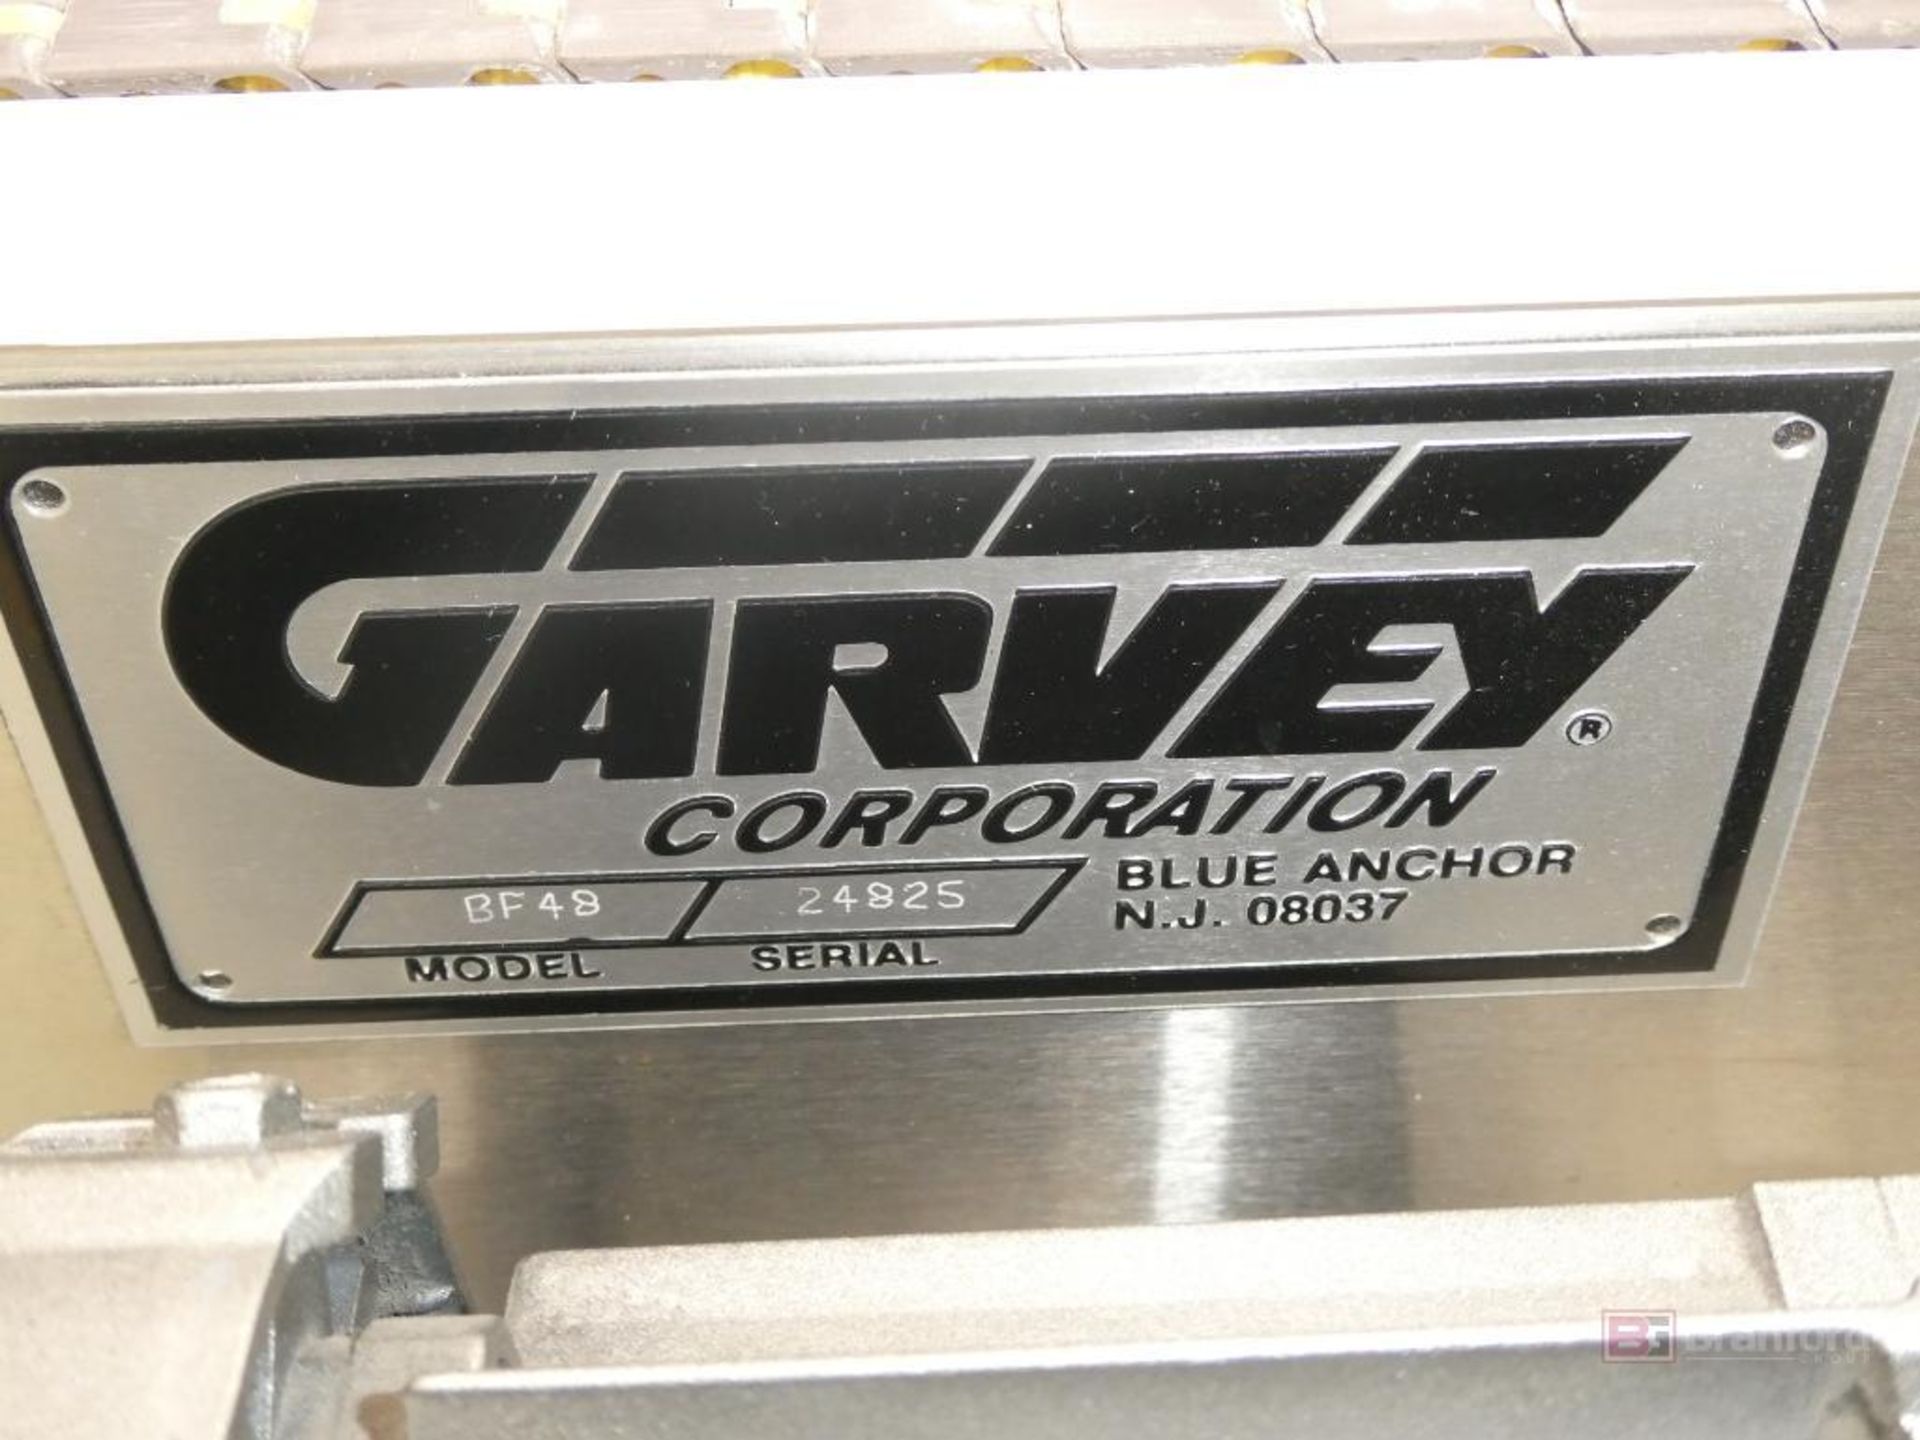 Garvey Model BF48, Stainless Steel Accumulation/Conveyor Table - Image 6 of 6